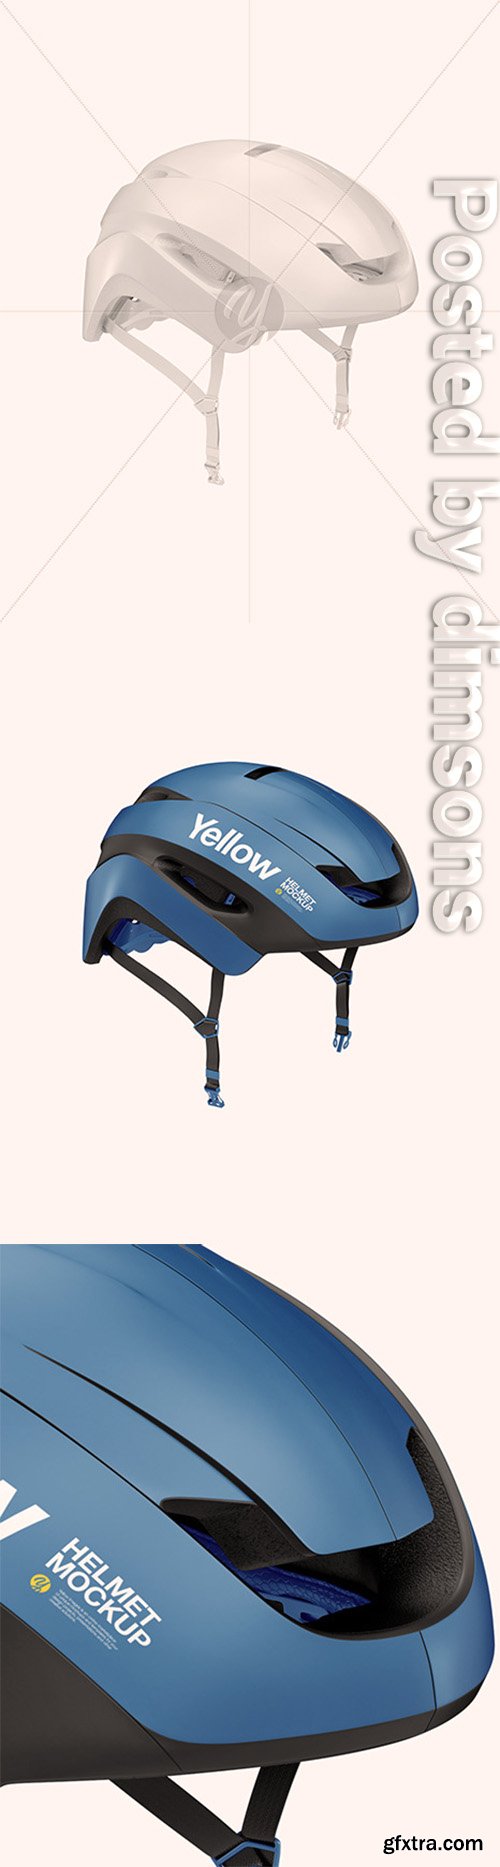 Cycling Helmet Mockup 46019